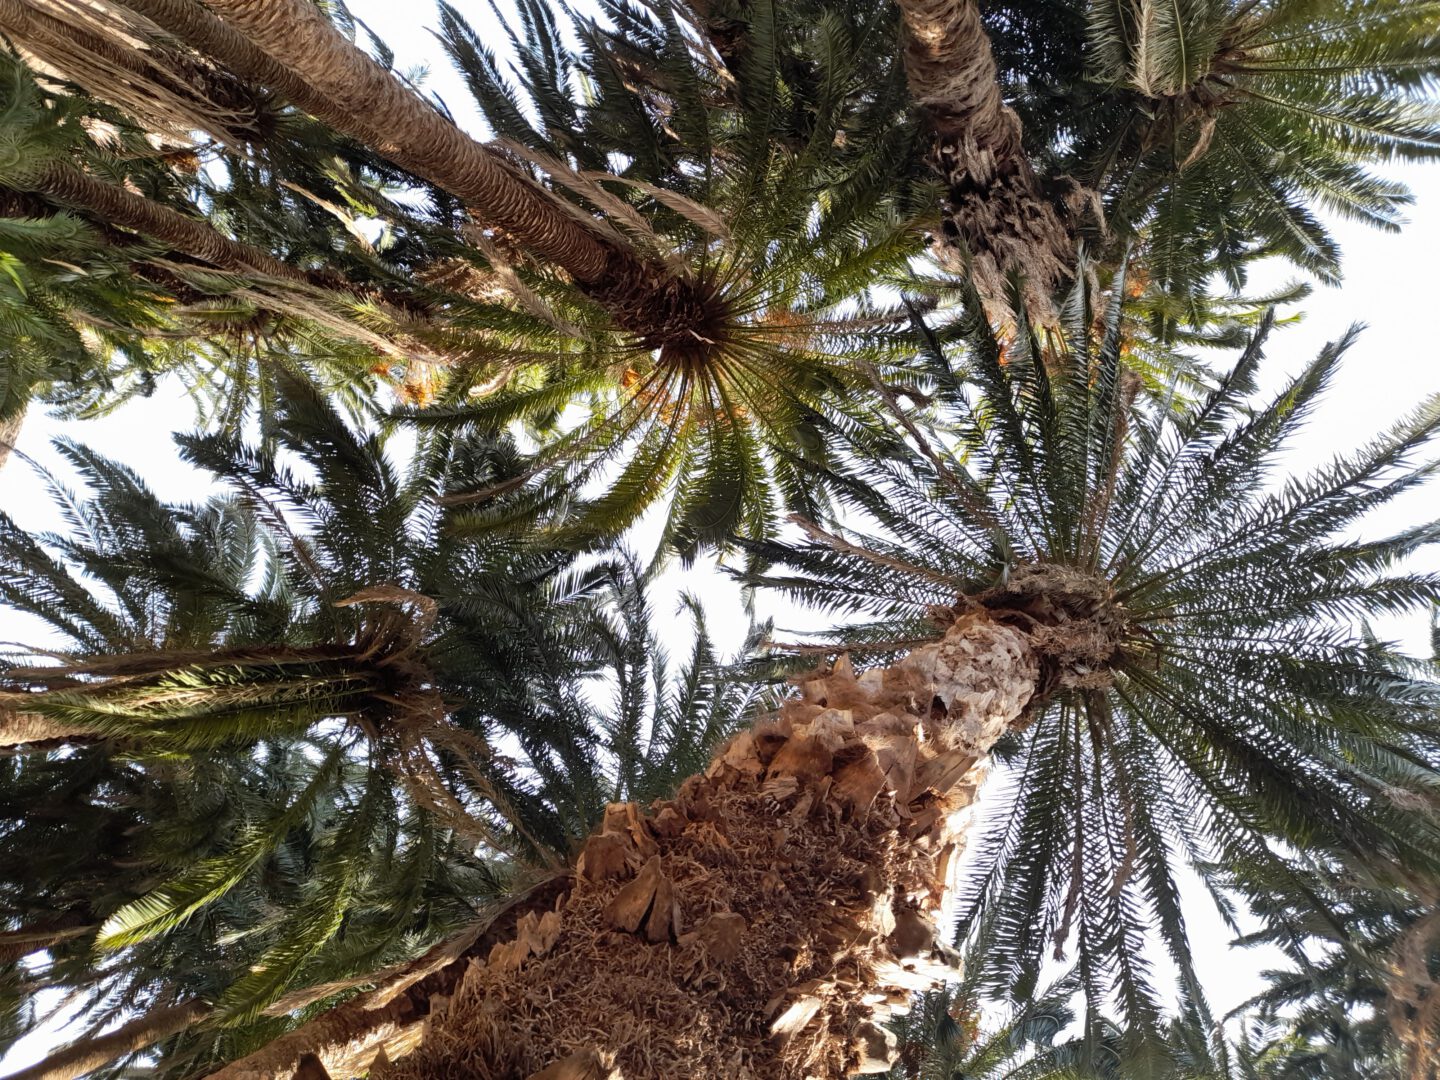 Vallei van de duizend palmen in Arteara